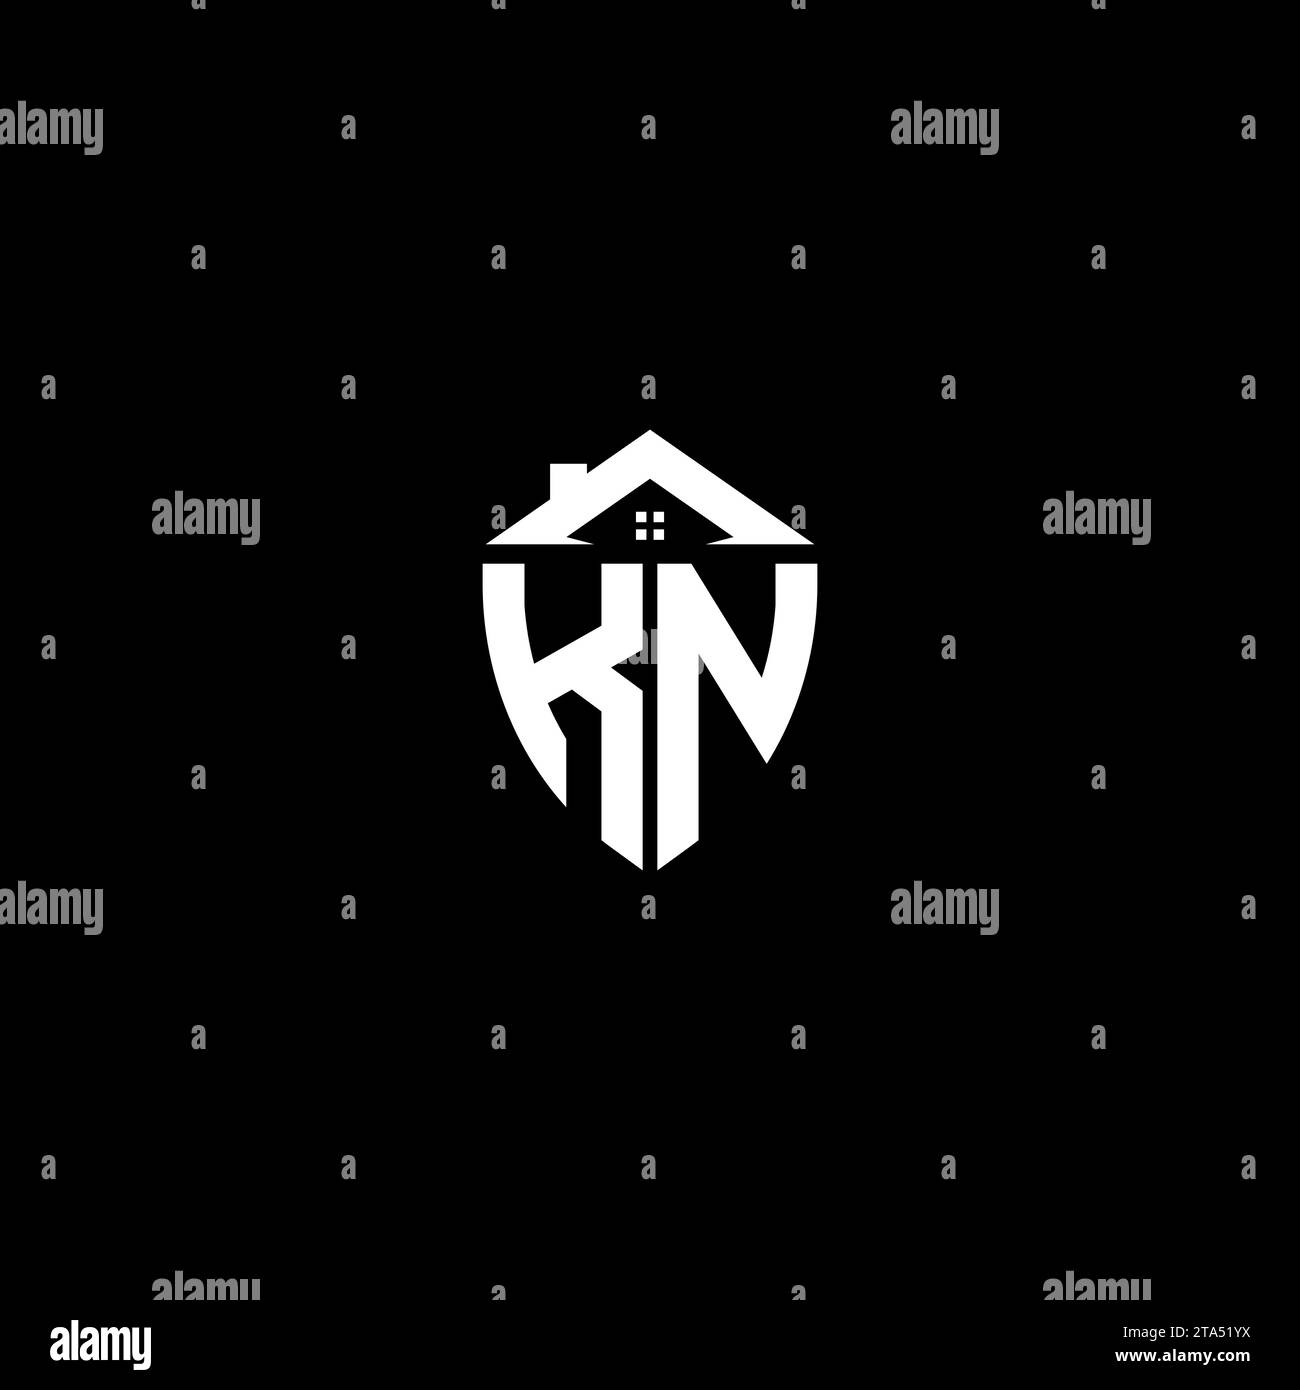 KN initials premium shield logo monogram with home designs modern templates Stock Vector